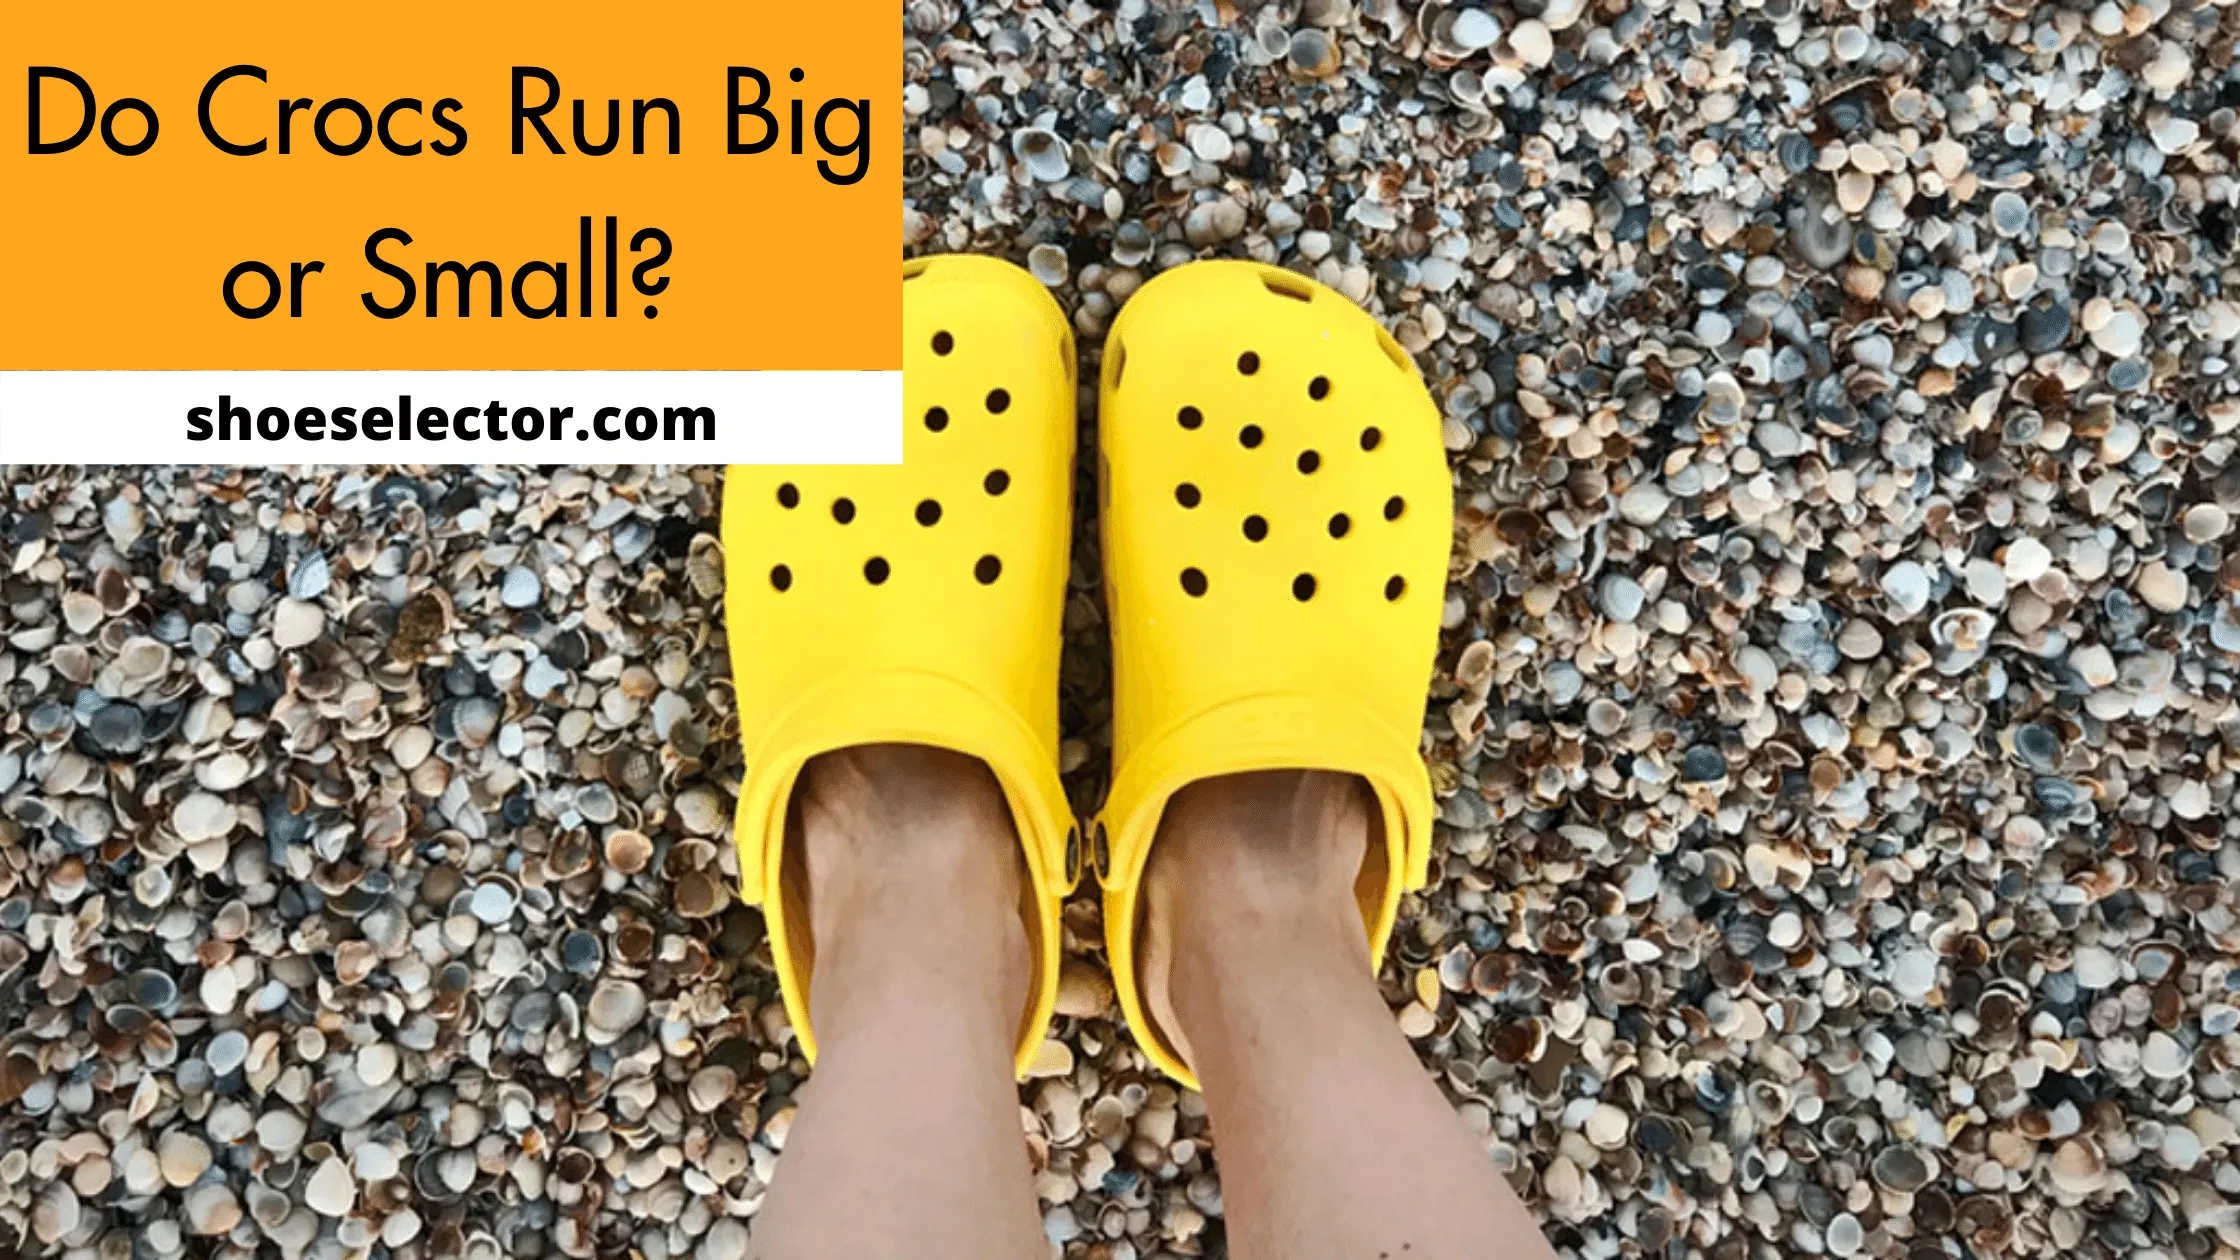 Do Crocs Run Big or Small? - #1 Solution